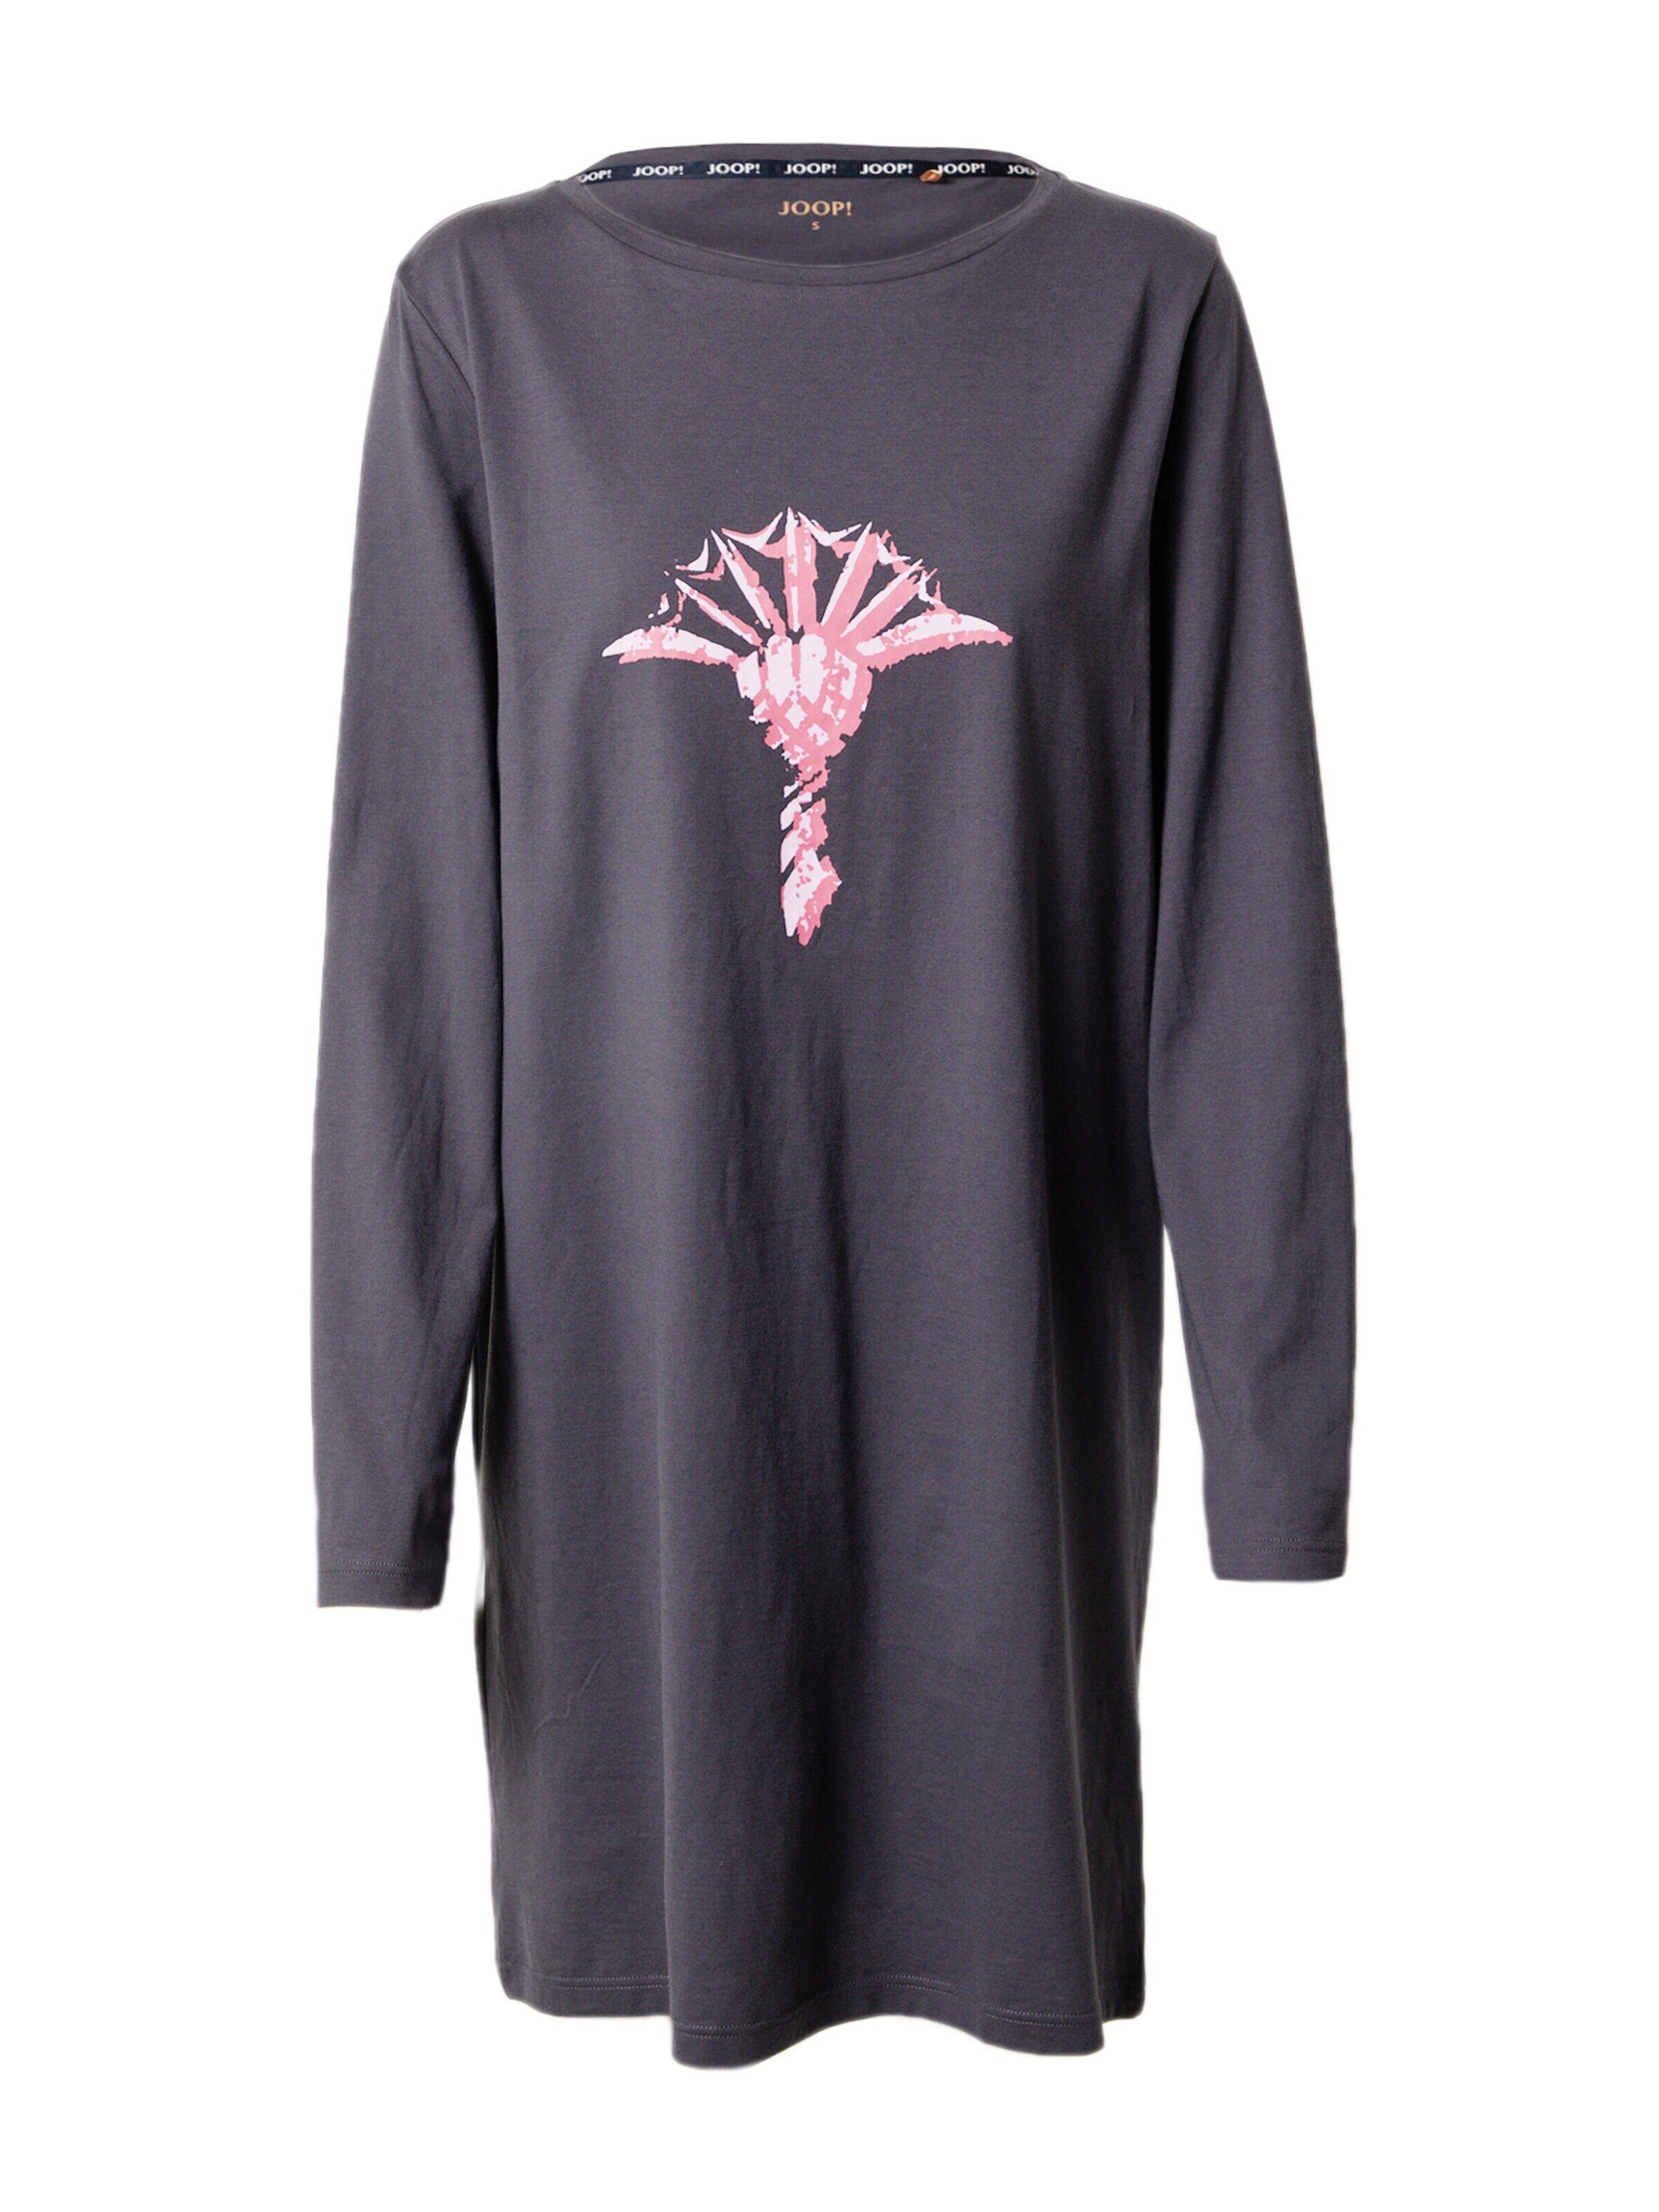 Plain/ohne Grau/Rosa Joop! 100% Baumwolle, Material: Details Kimono,